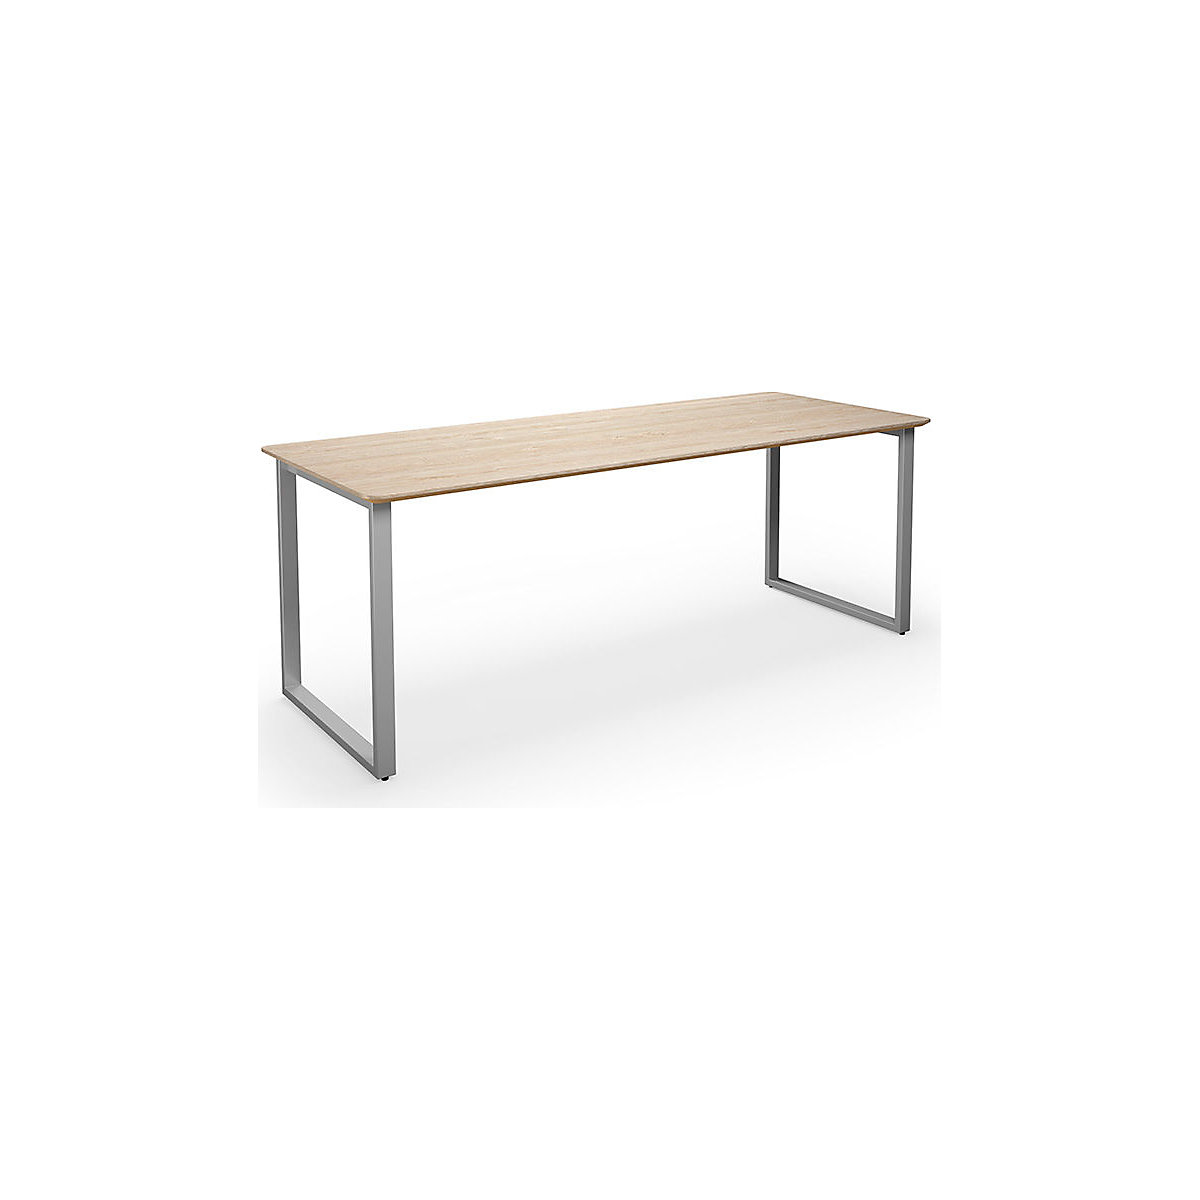 DUO-O Trend multi-purpose desk, straight tabletop, rounded corners, WxD 1800 x 800 mm, oak, silver-2